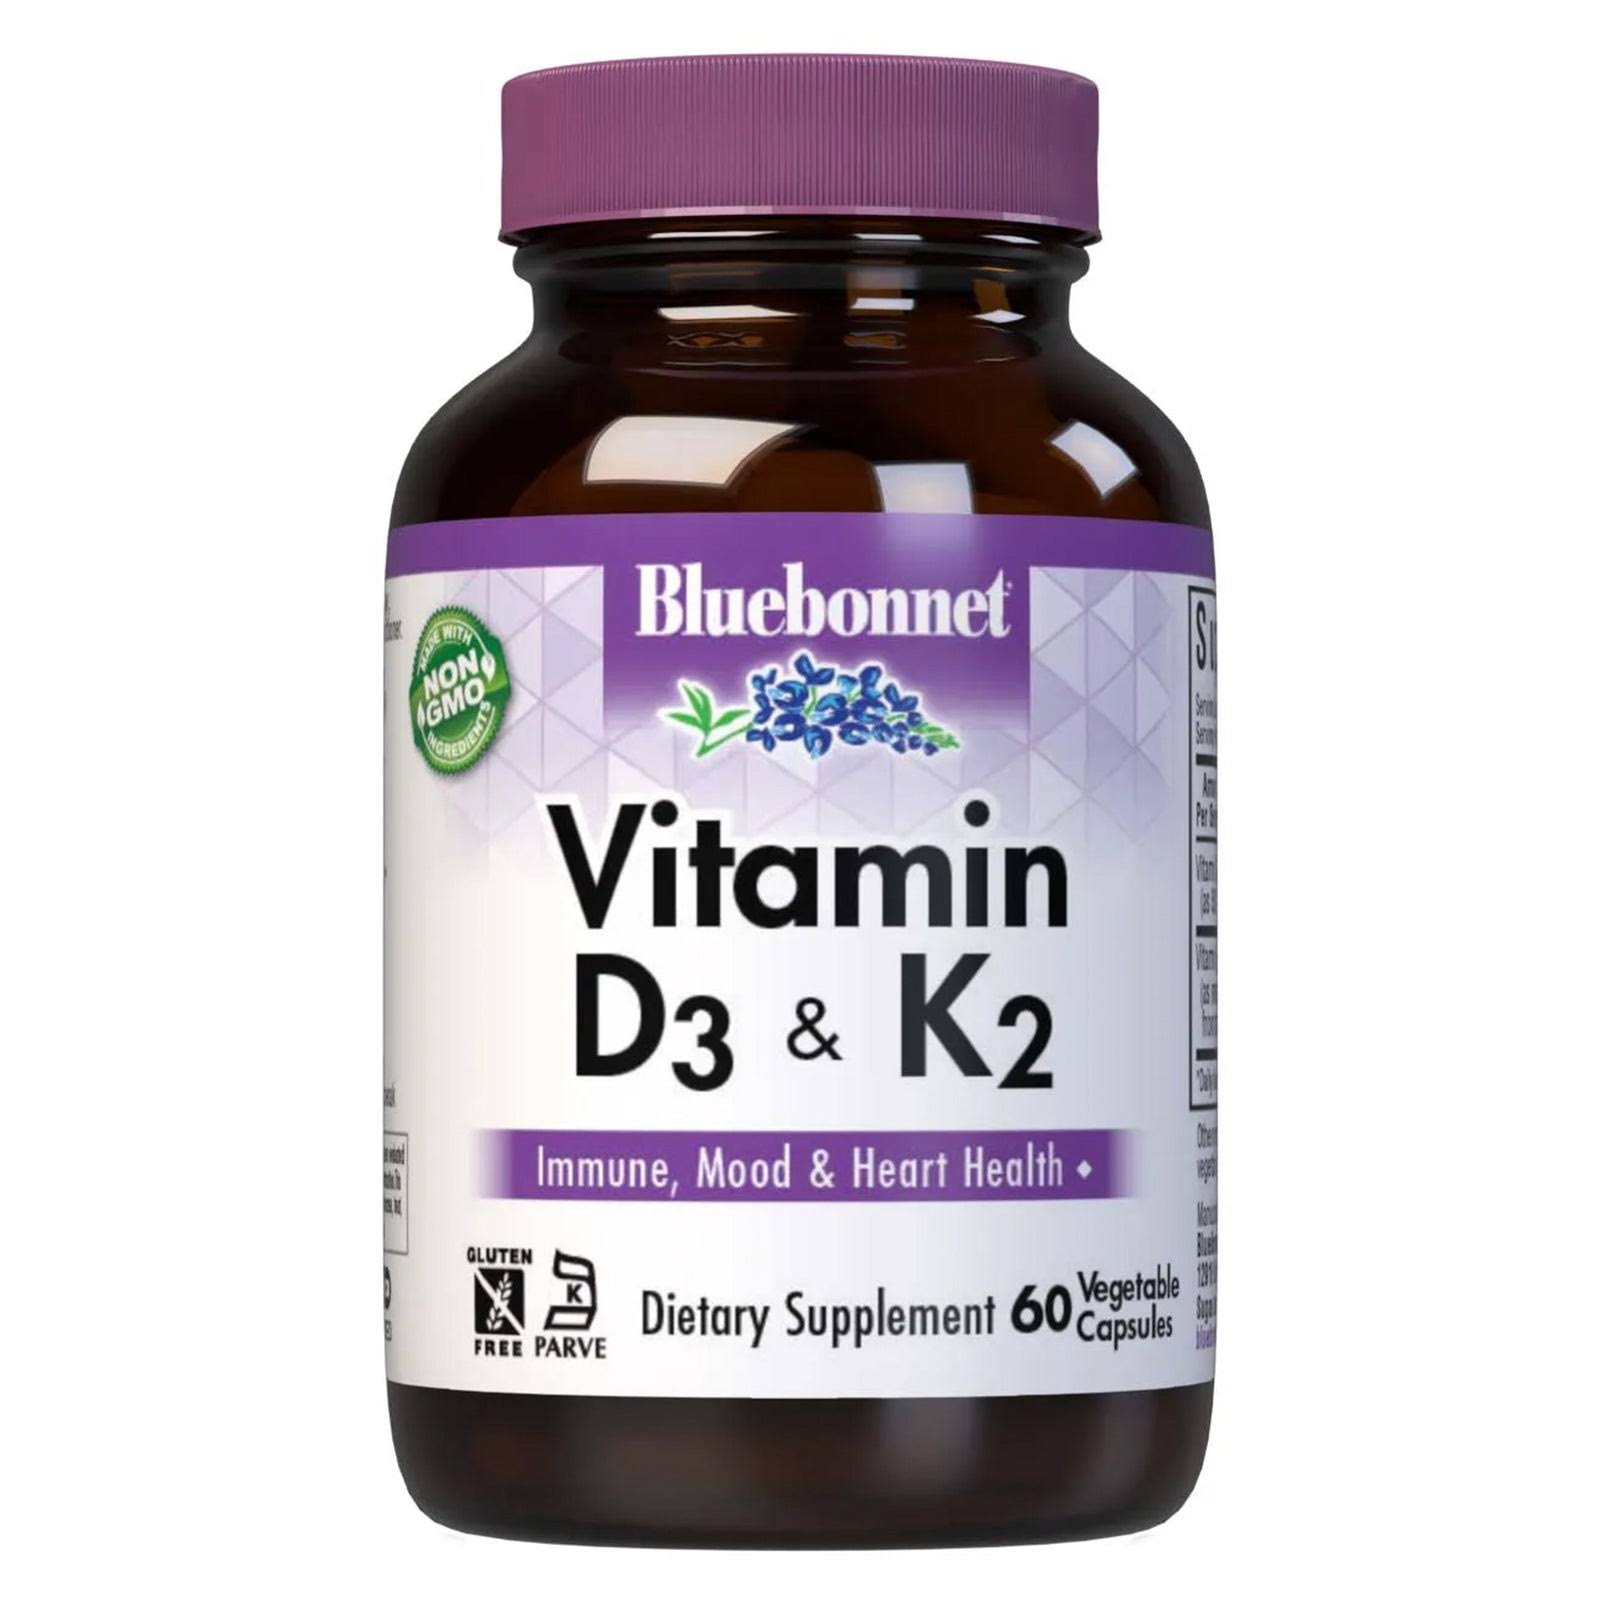 Bluebonnet Vitamin D3 & K2, Vegetable Capsules - 60 capsules